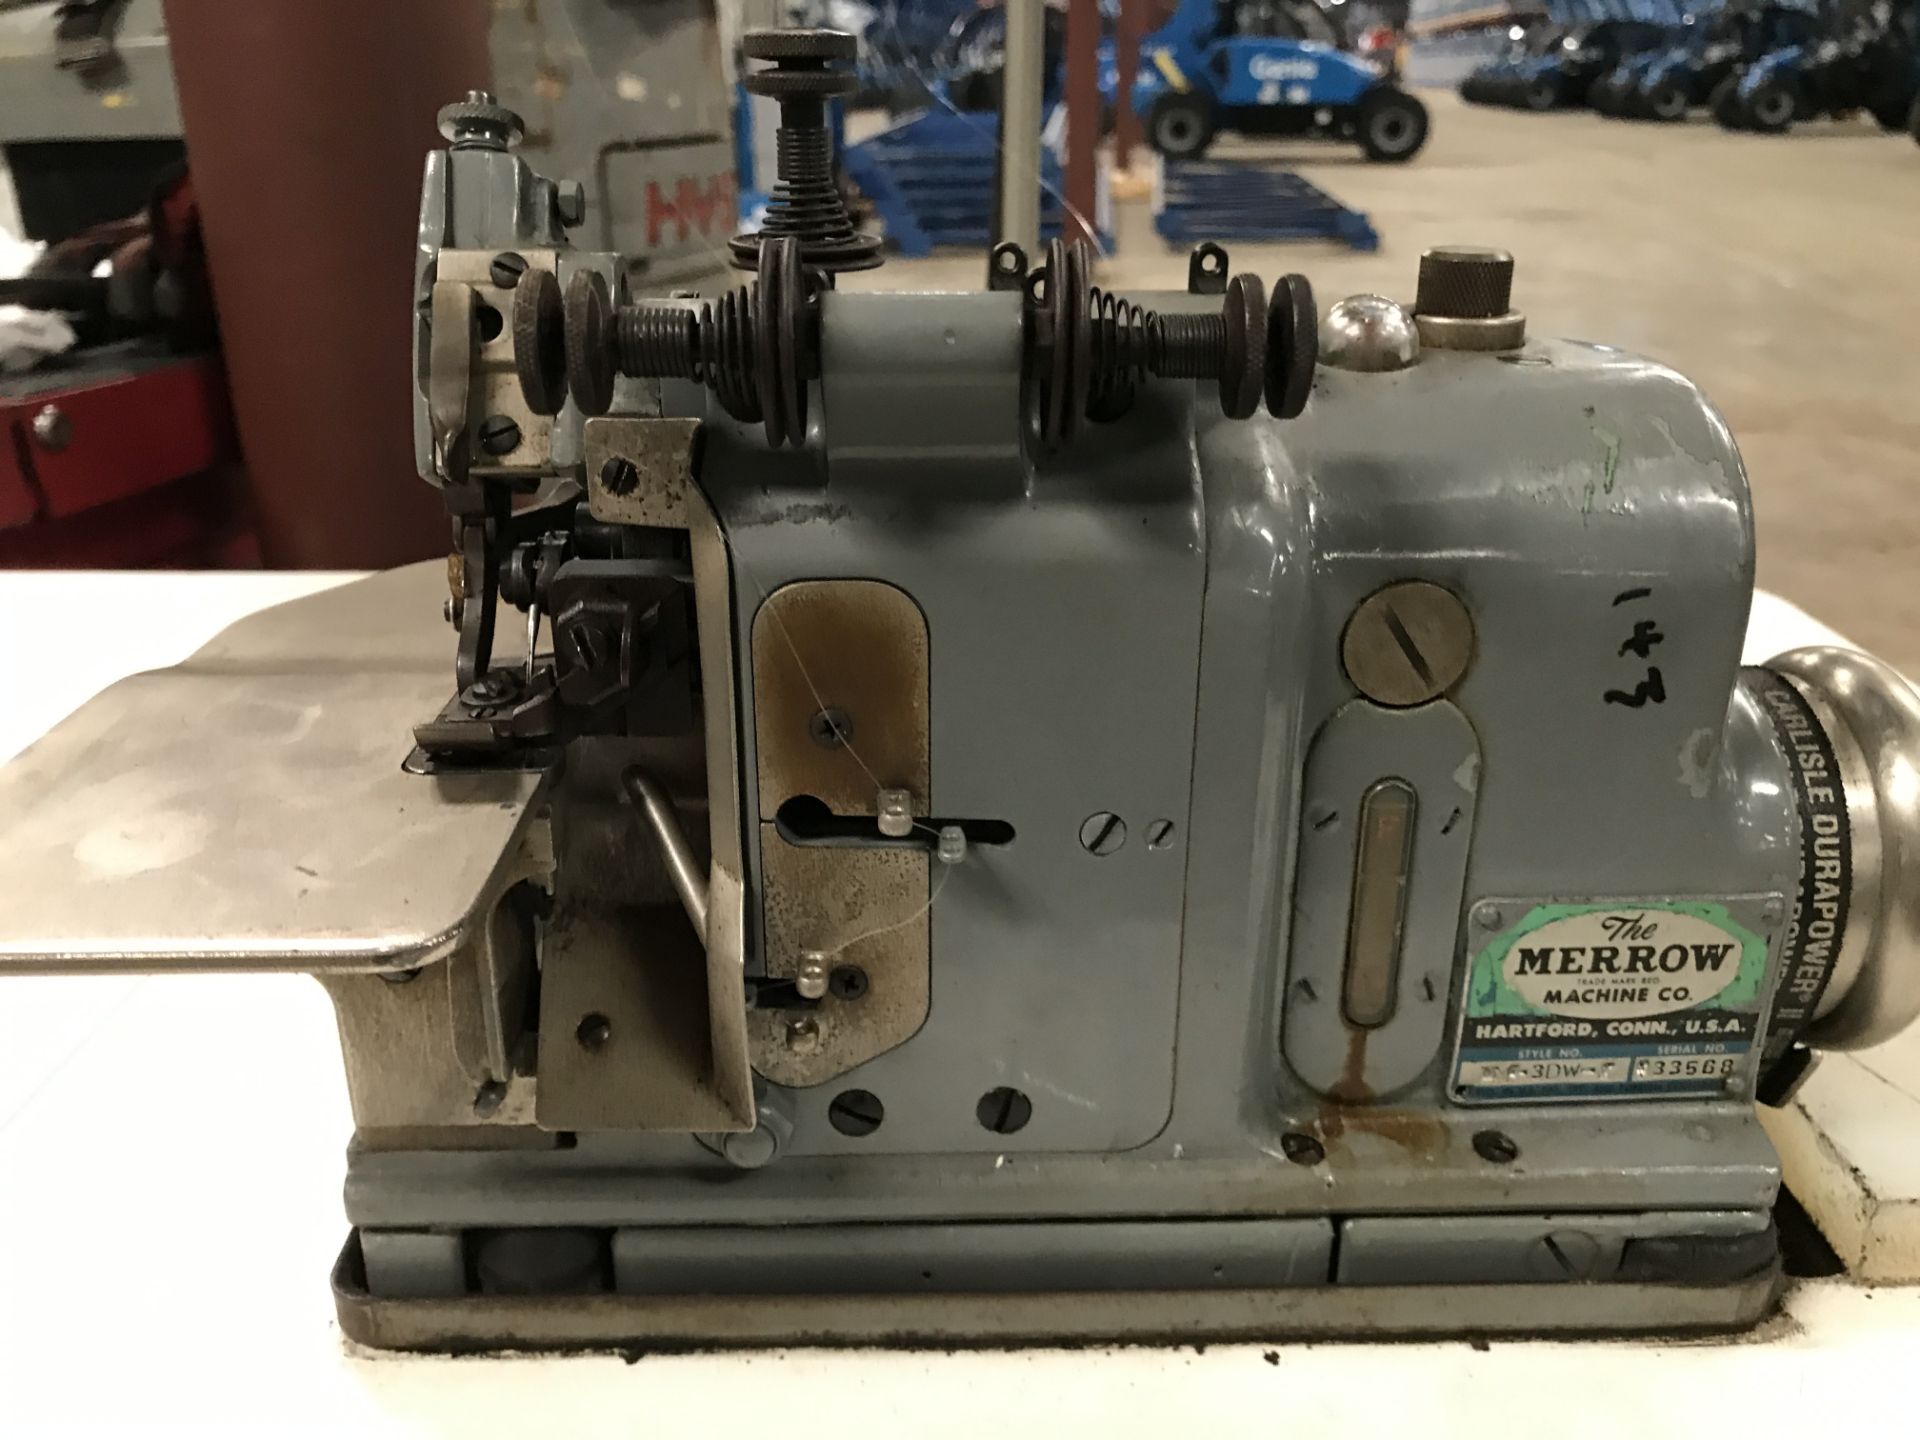 Merrow Sewing Machine, Model# MG-3DW-2, Serial# 233568, 110/220V, Rigging Fee $25 - Image 3 of 5